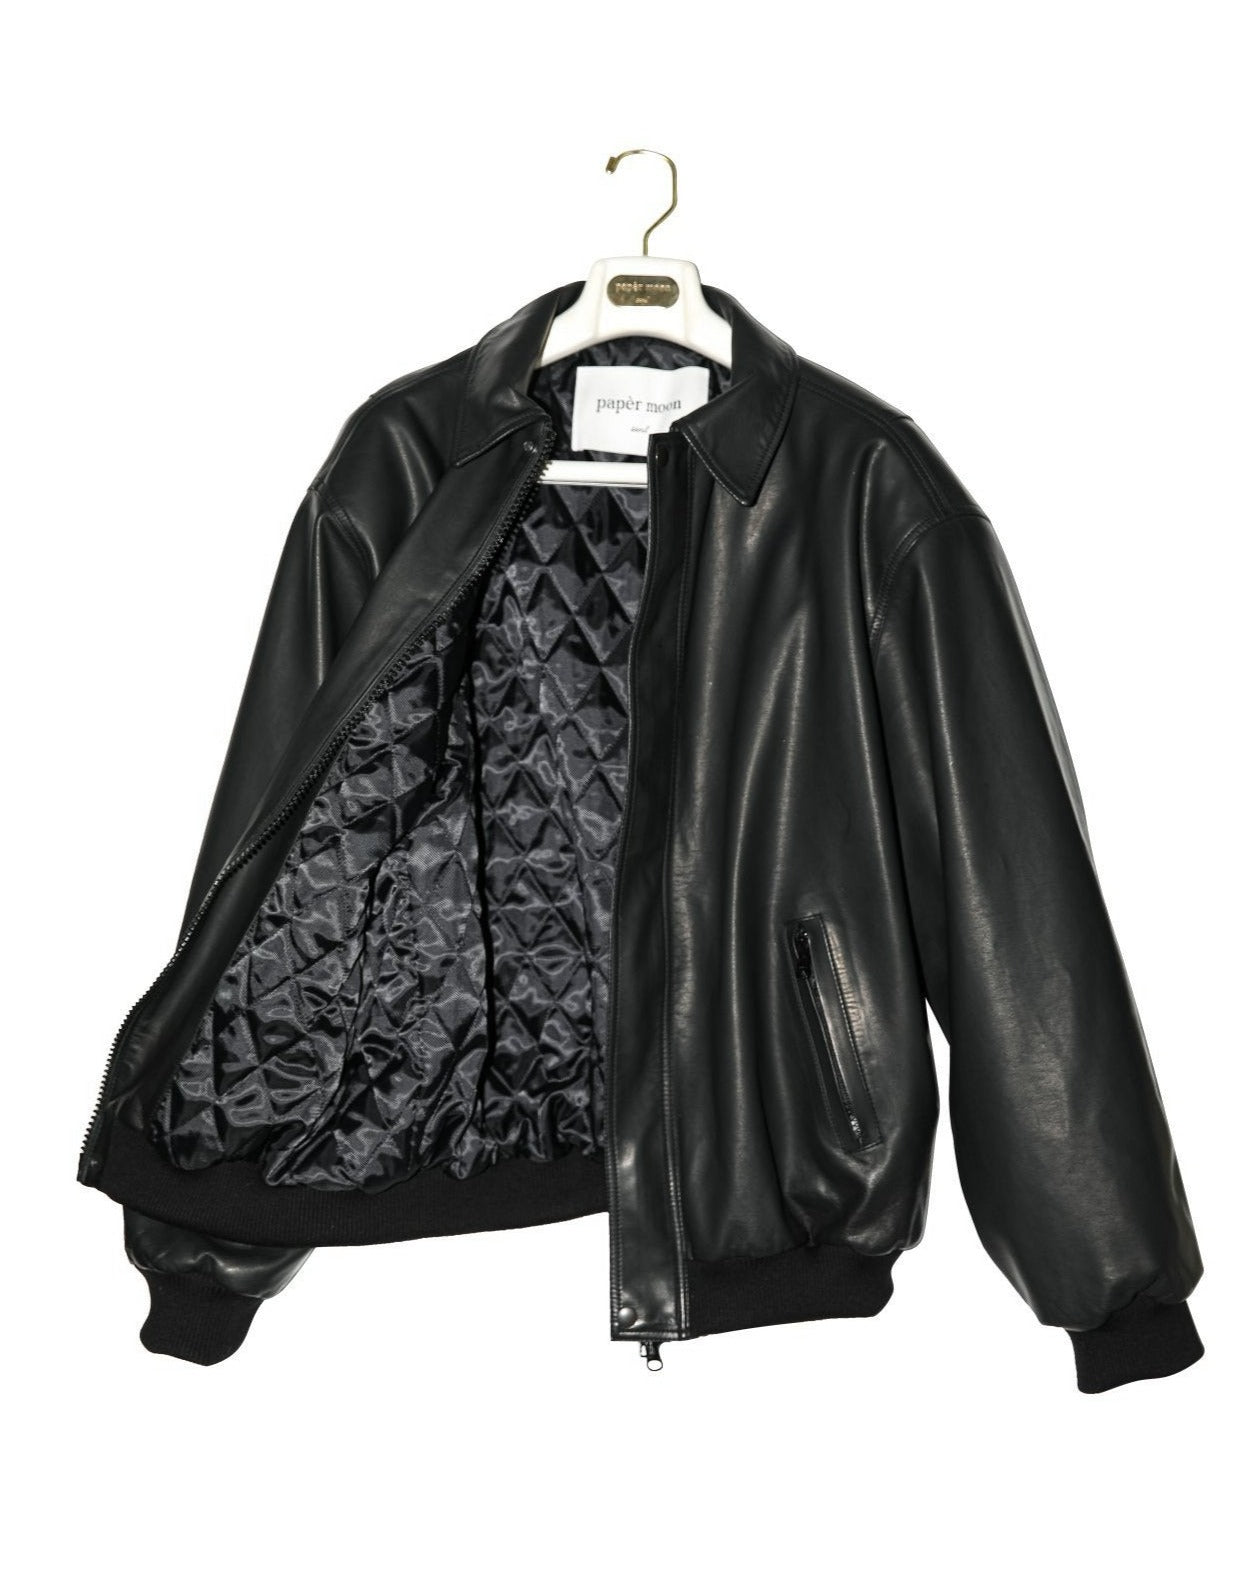 papermoon leather jacket レザージャケット - アウター